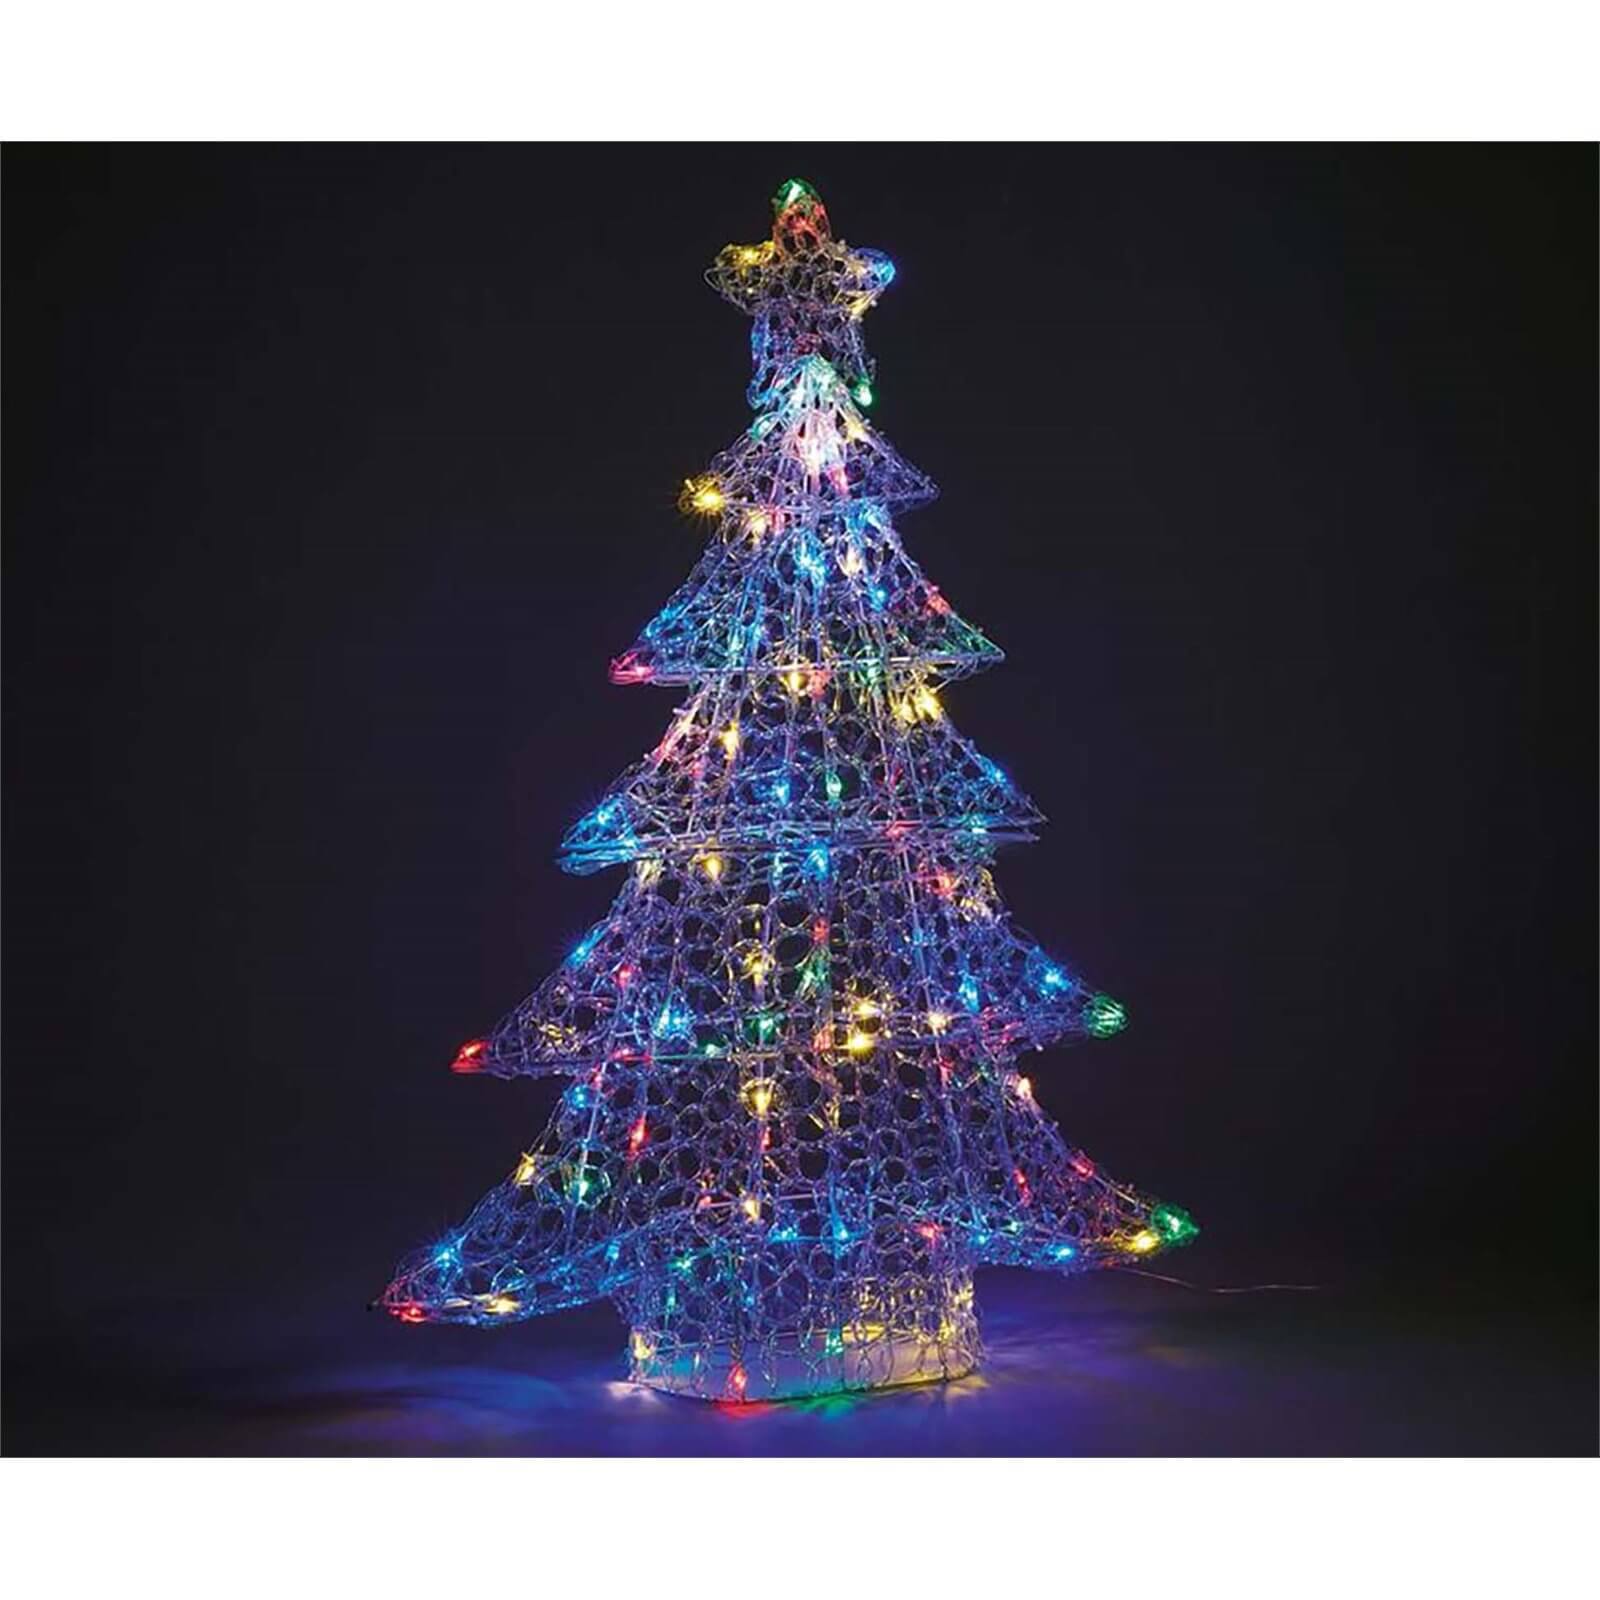 Acrylic LED Tree Multicolour 3D Christmas Light Decoration - 99cm